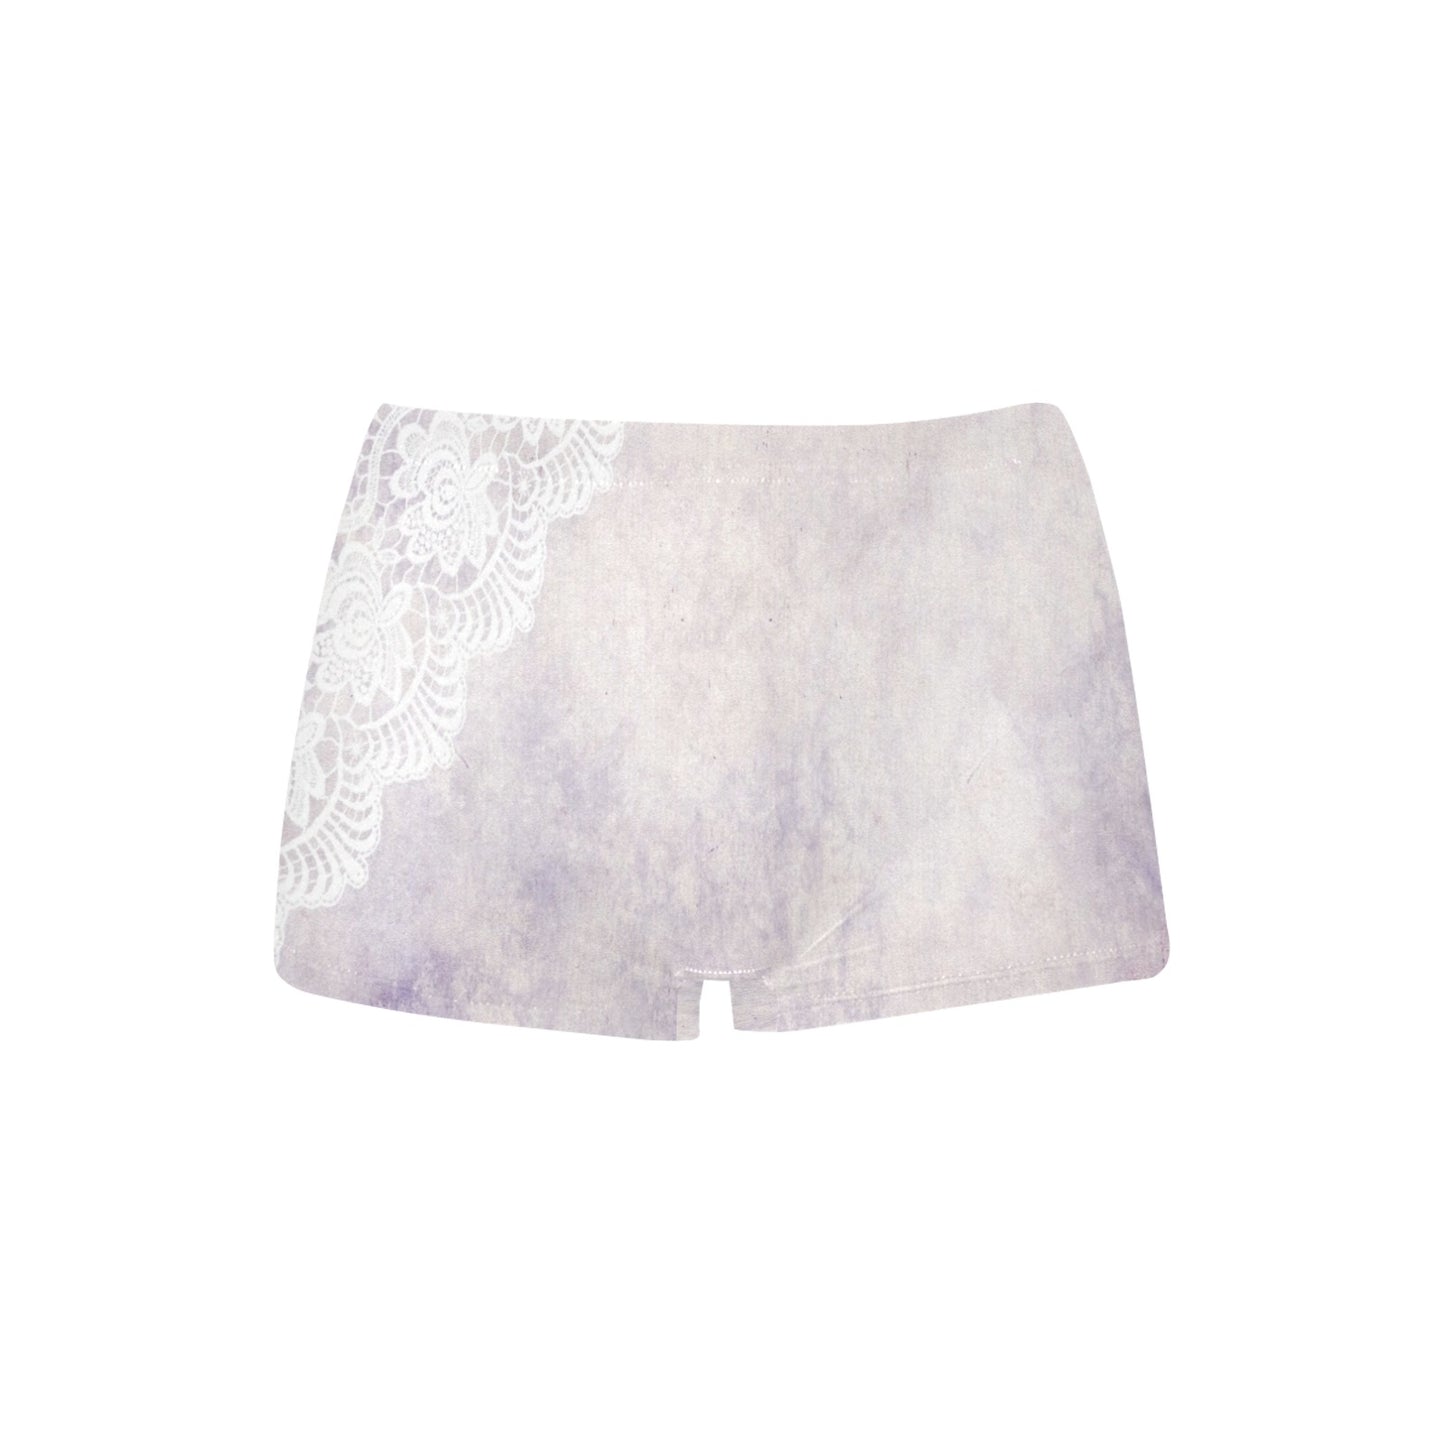 Printed Lace Boyshorts, daisy dukes, pum pum shorts, shortie shorts , design 40